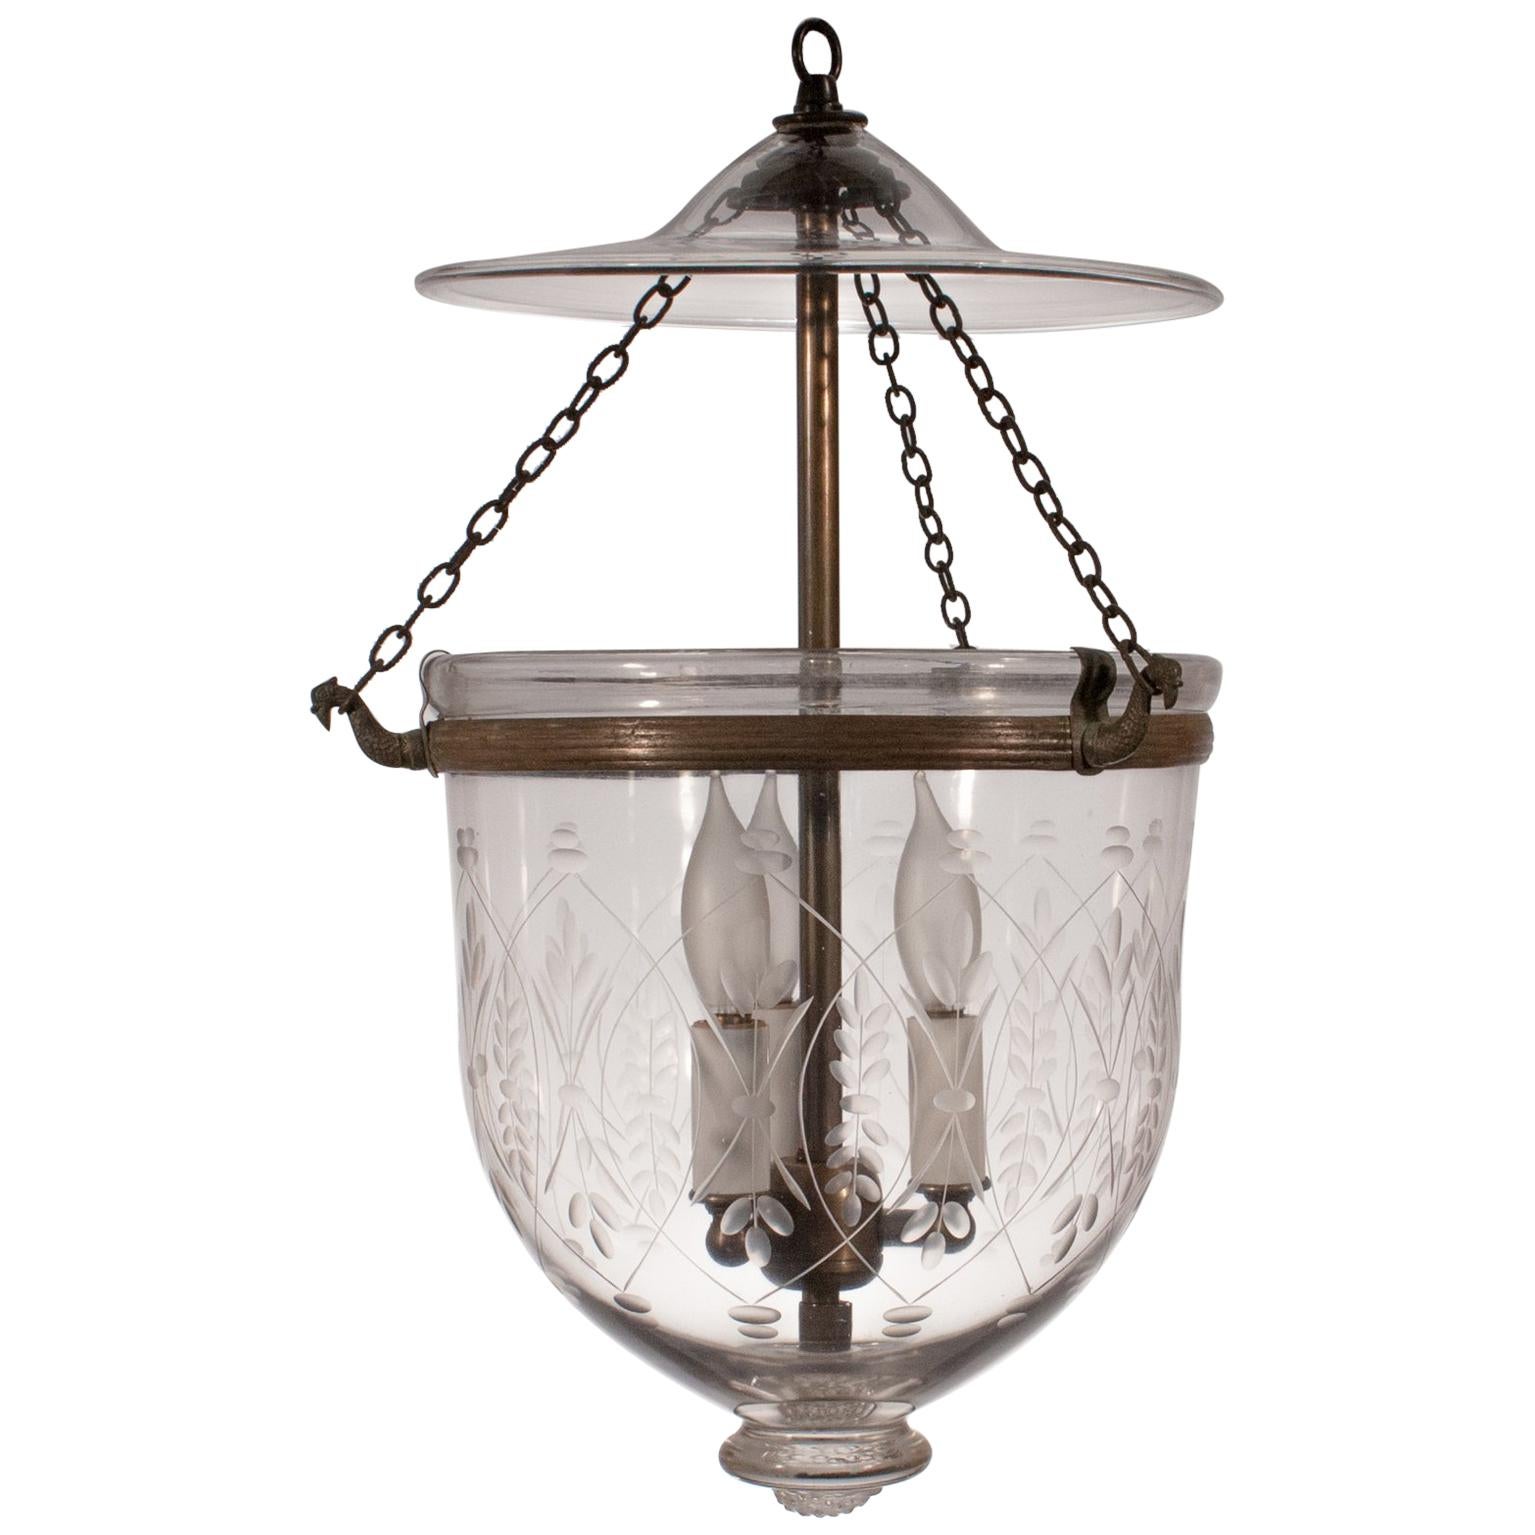 Petite Bell Jar Lantern with Wheat Etching